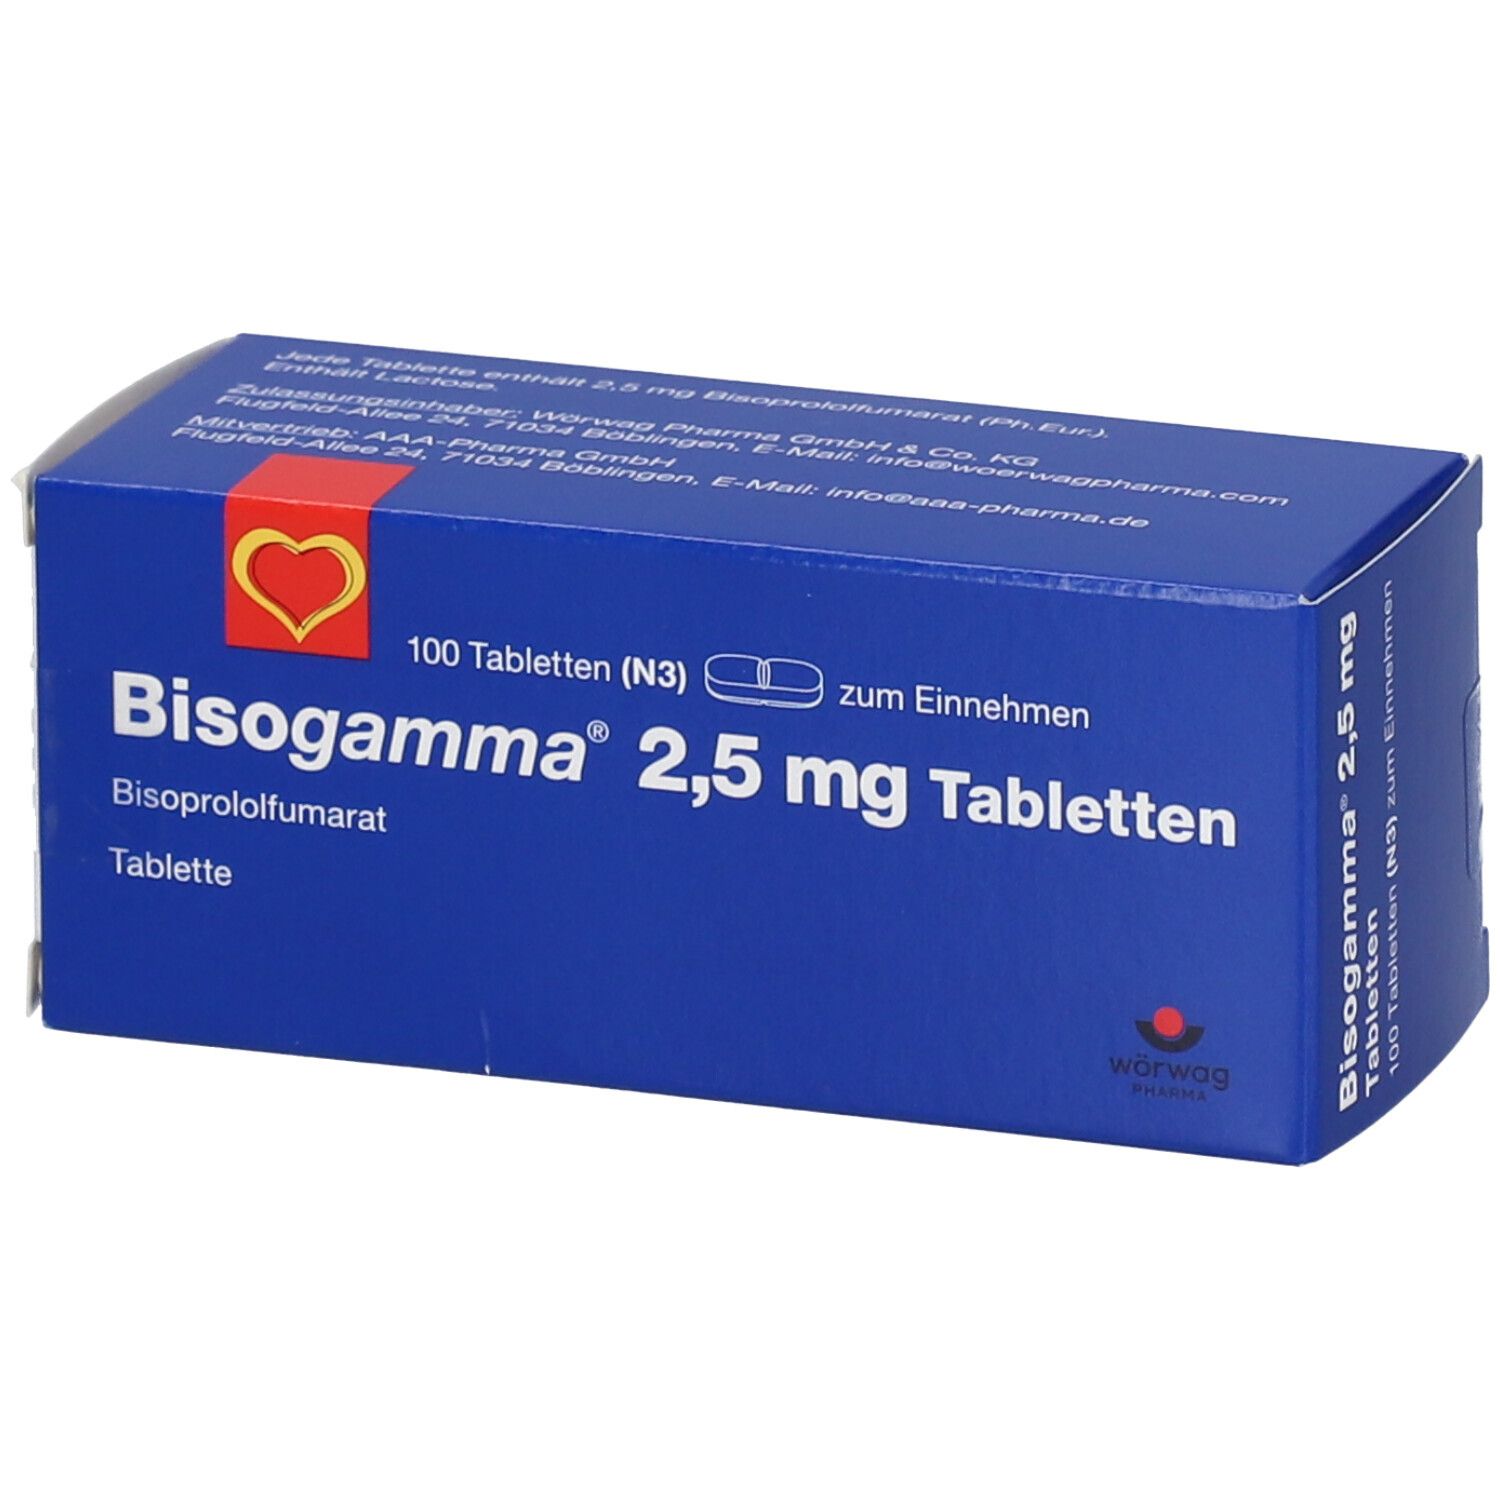 Bisogamma® 2,5 mg 100 St mit dem E-Rezept kaufen - SHOP APOTHEKE